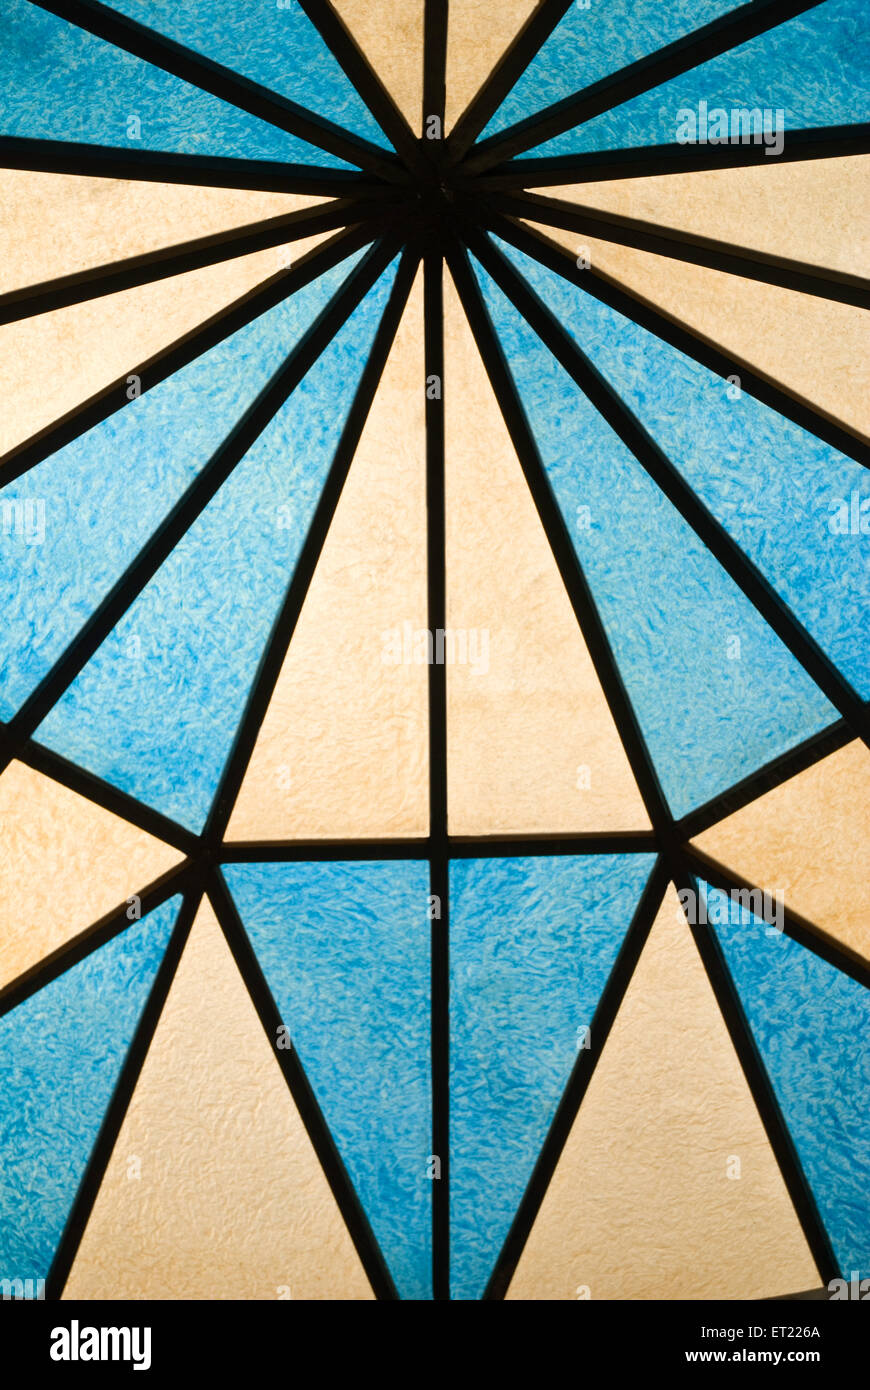 roof design acrylic glass Stock Photo